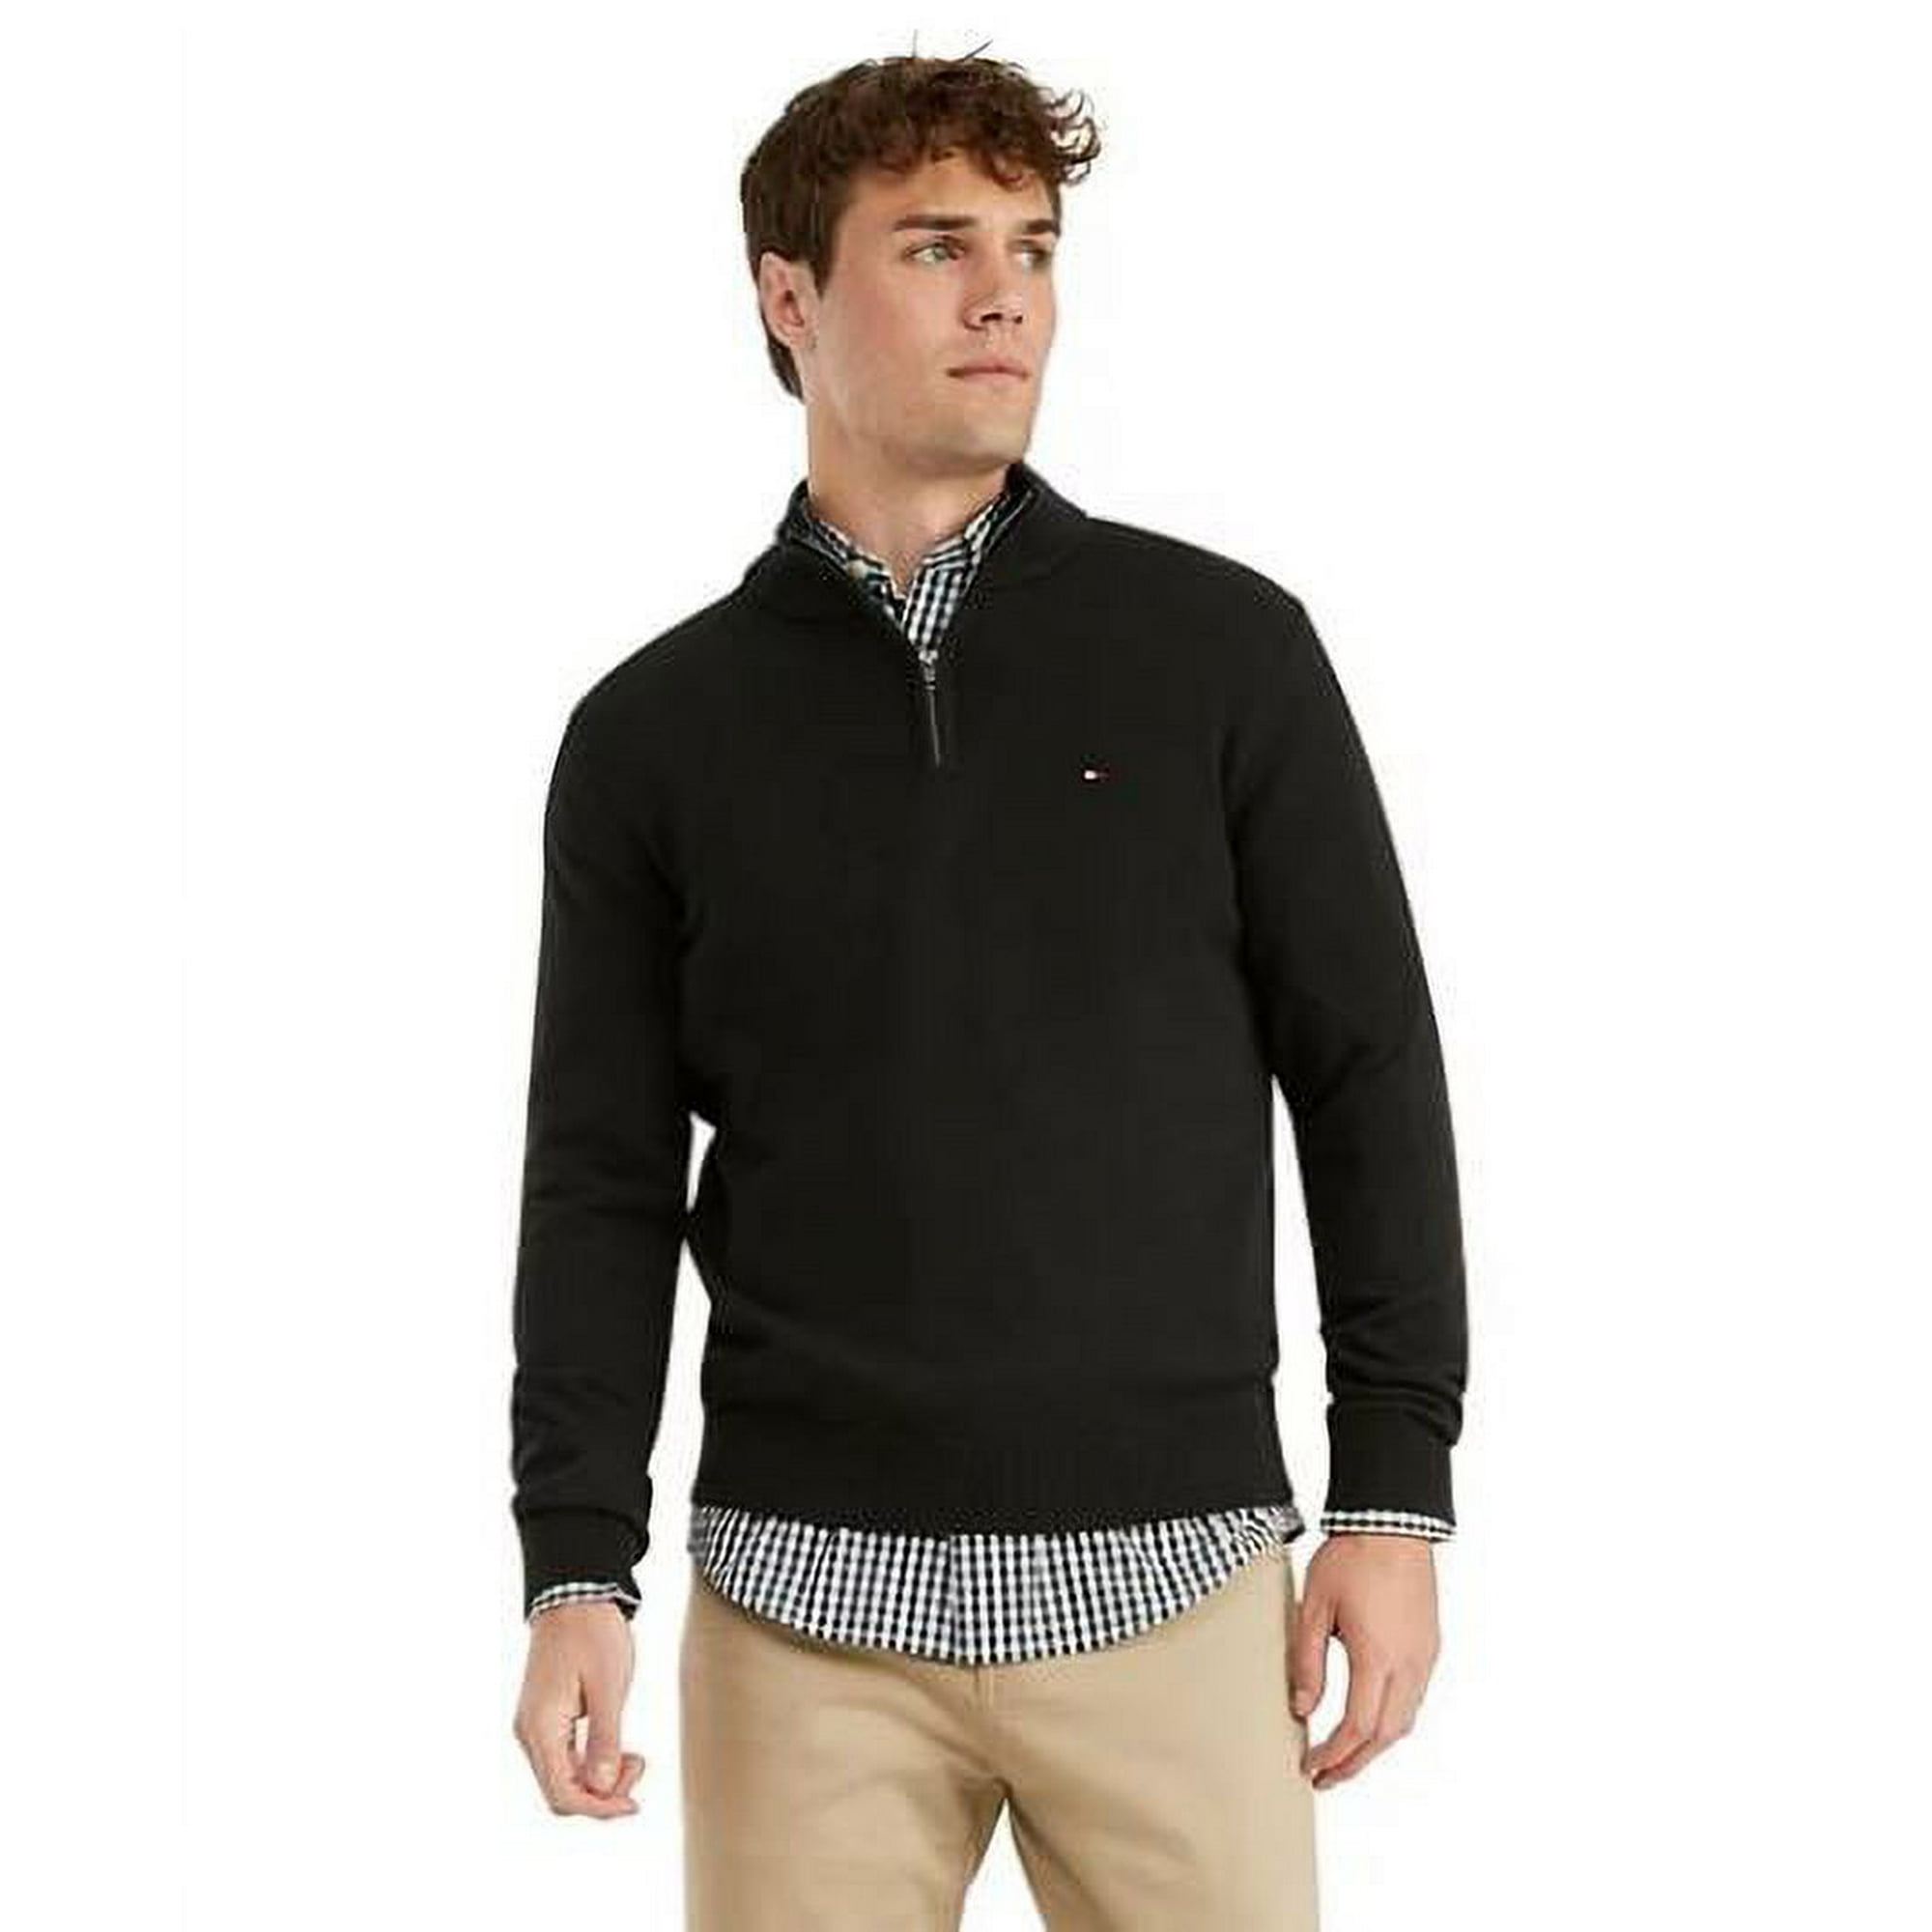 Tommy Hilfiger Signature Quarter-Zip Sweater, Medium - Walmart.com